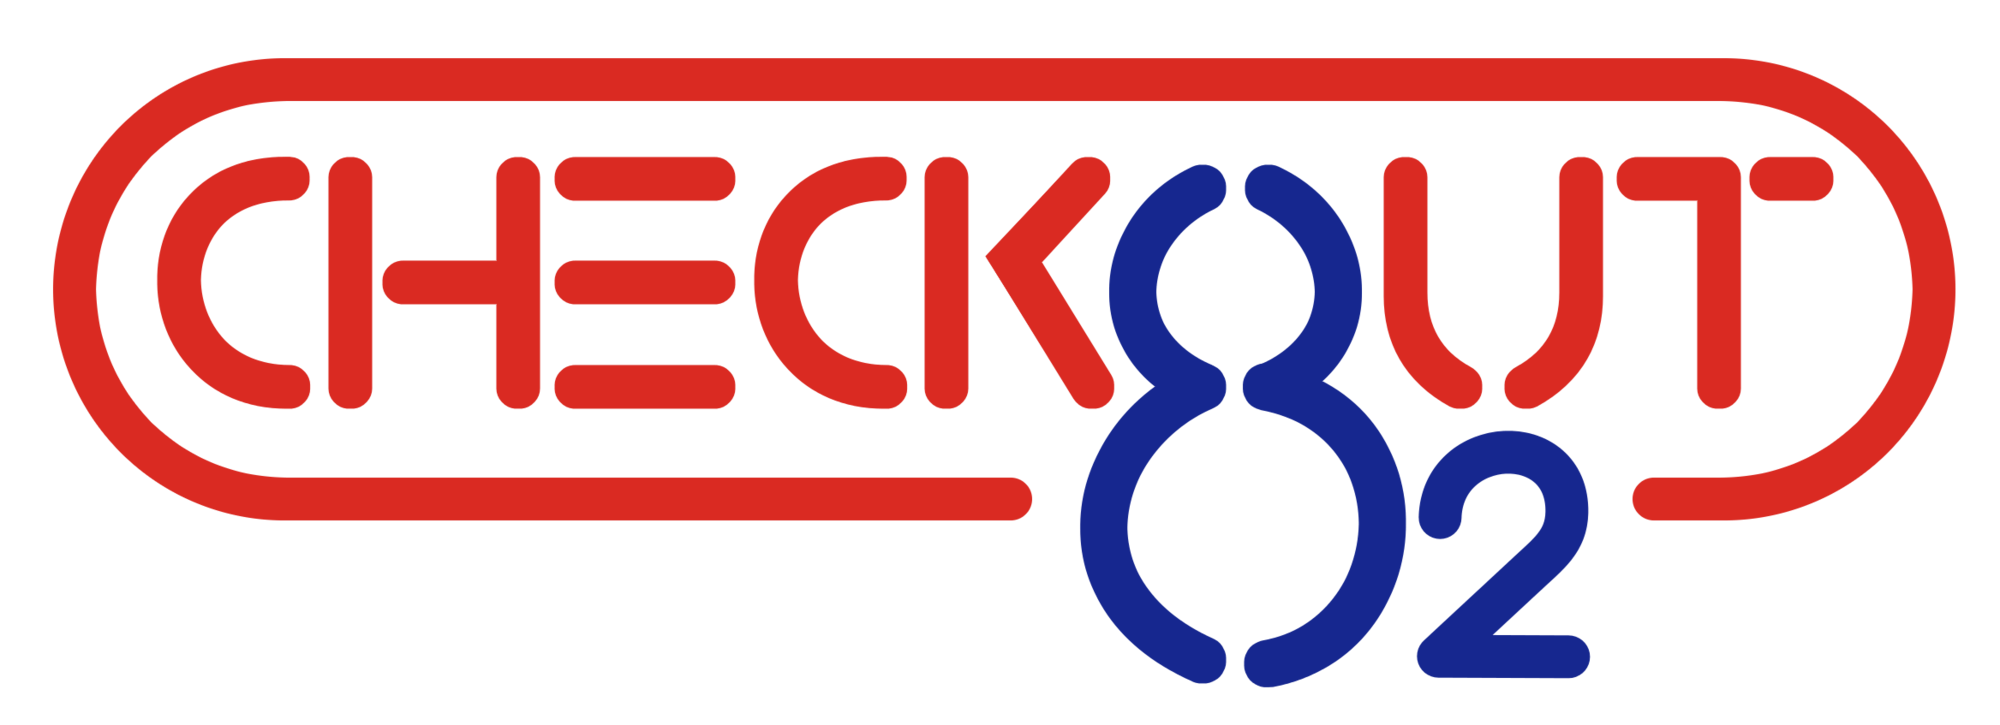 Tesco Logo - Tesco | Logopedia | FANDOM powered by Wikia